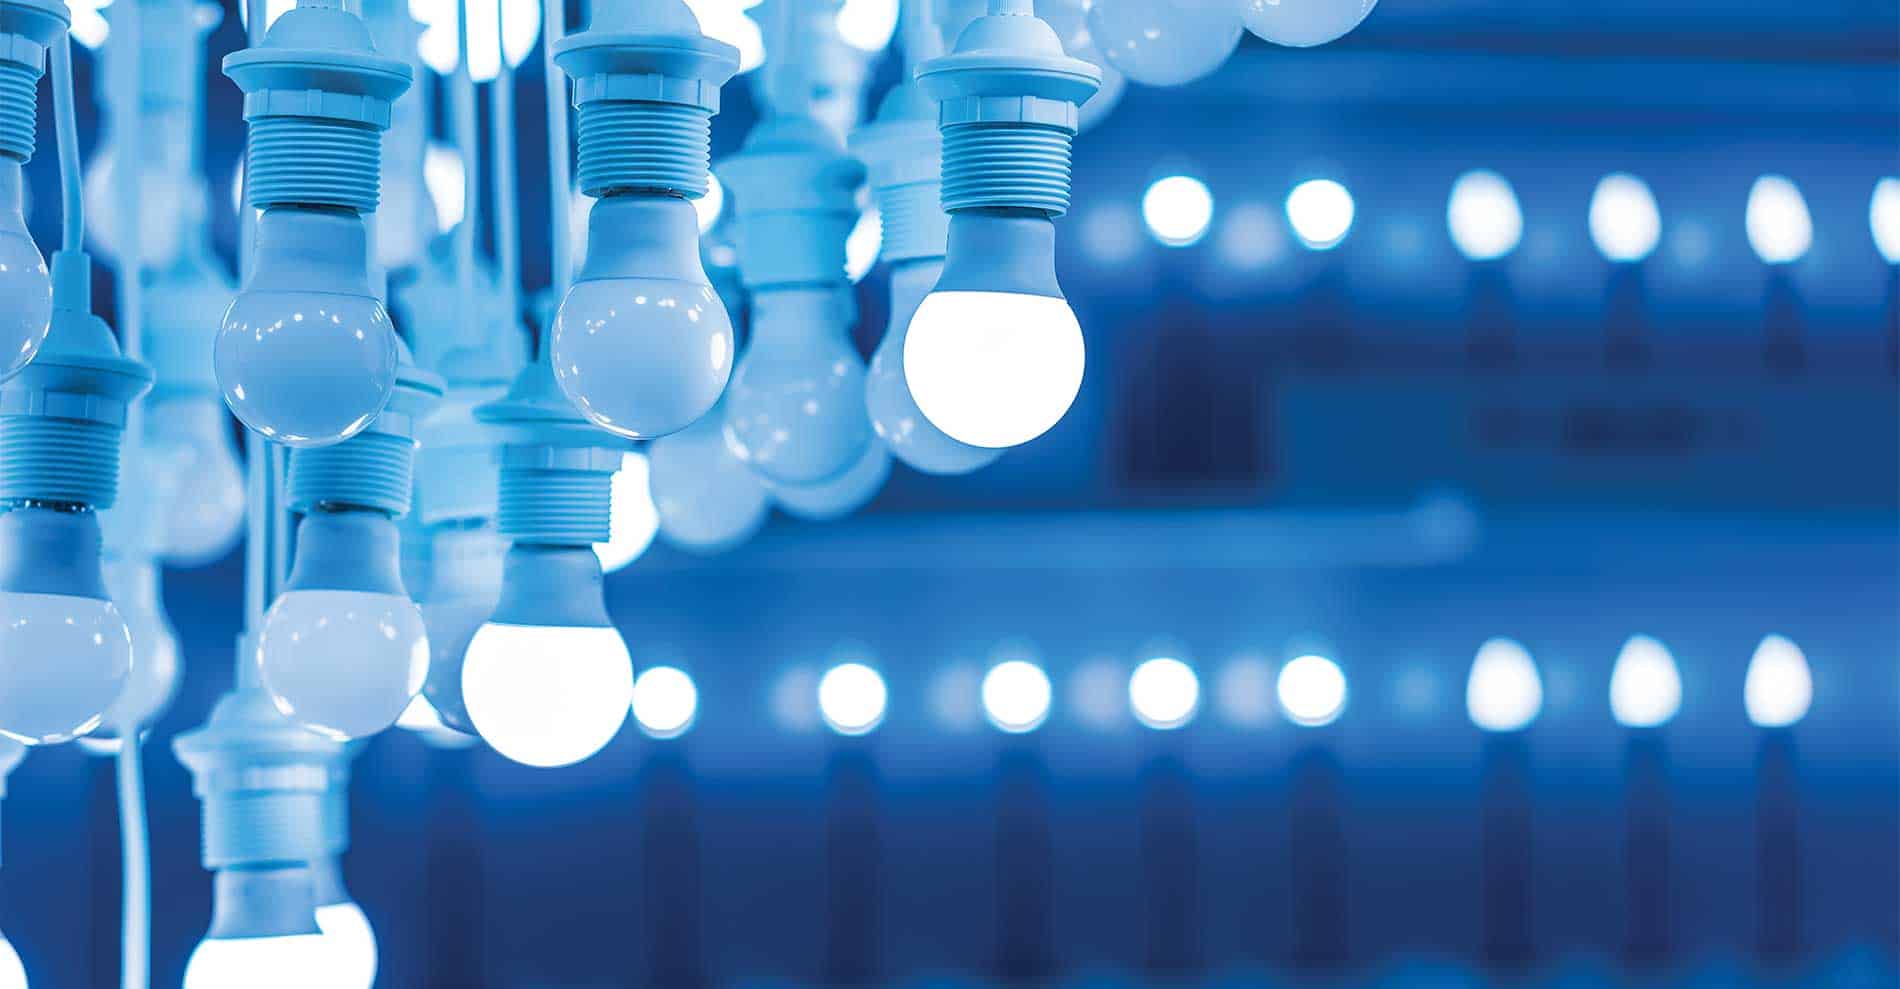 blue light bulbs